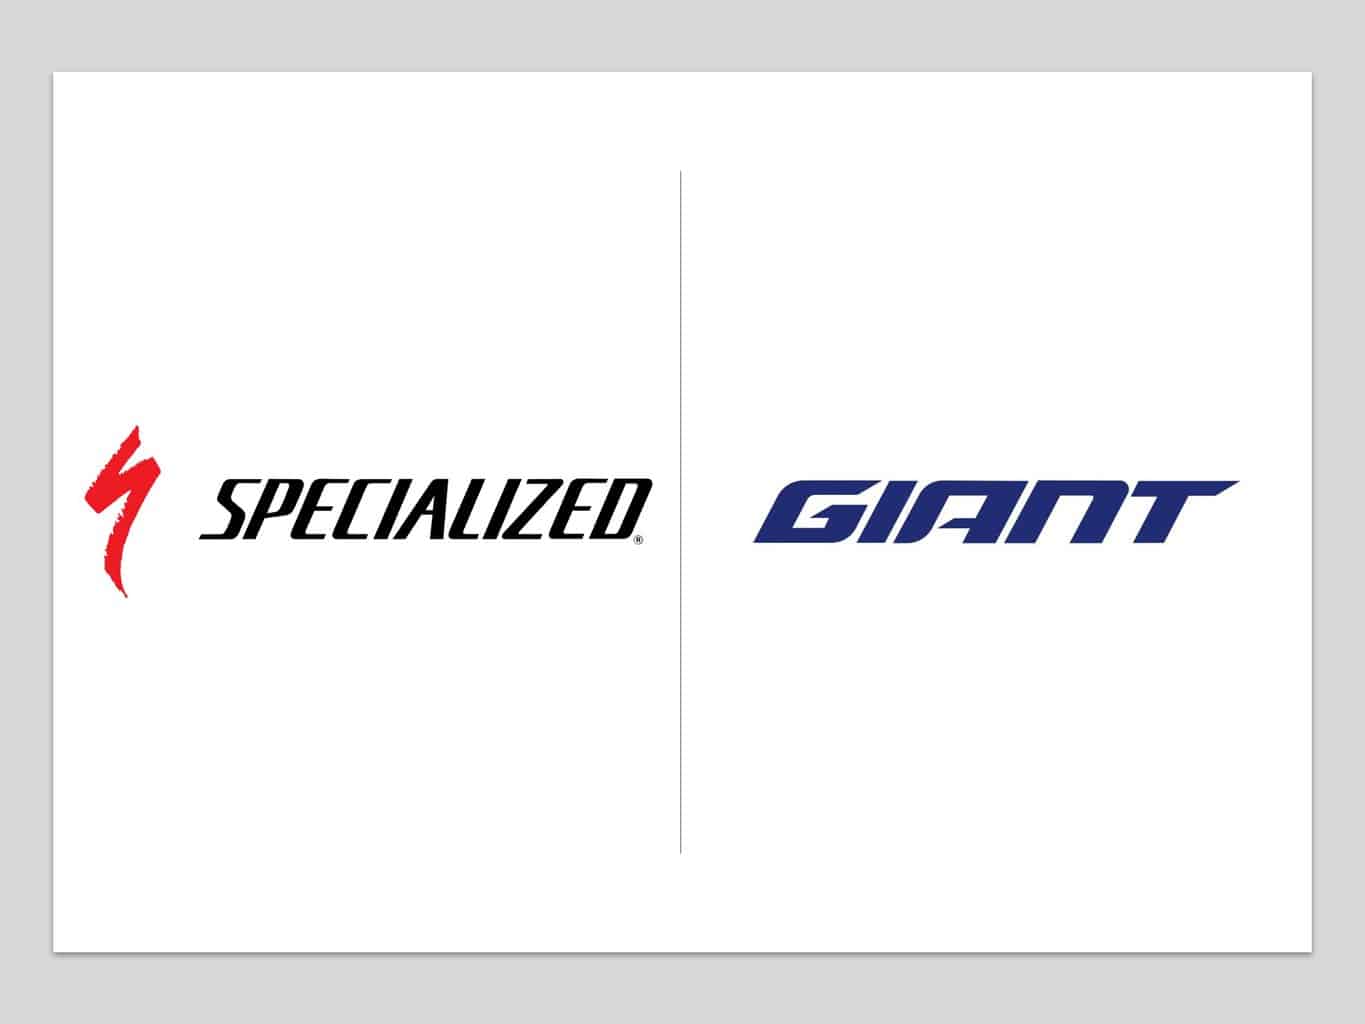 Specialized vs Giant Road Bikes